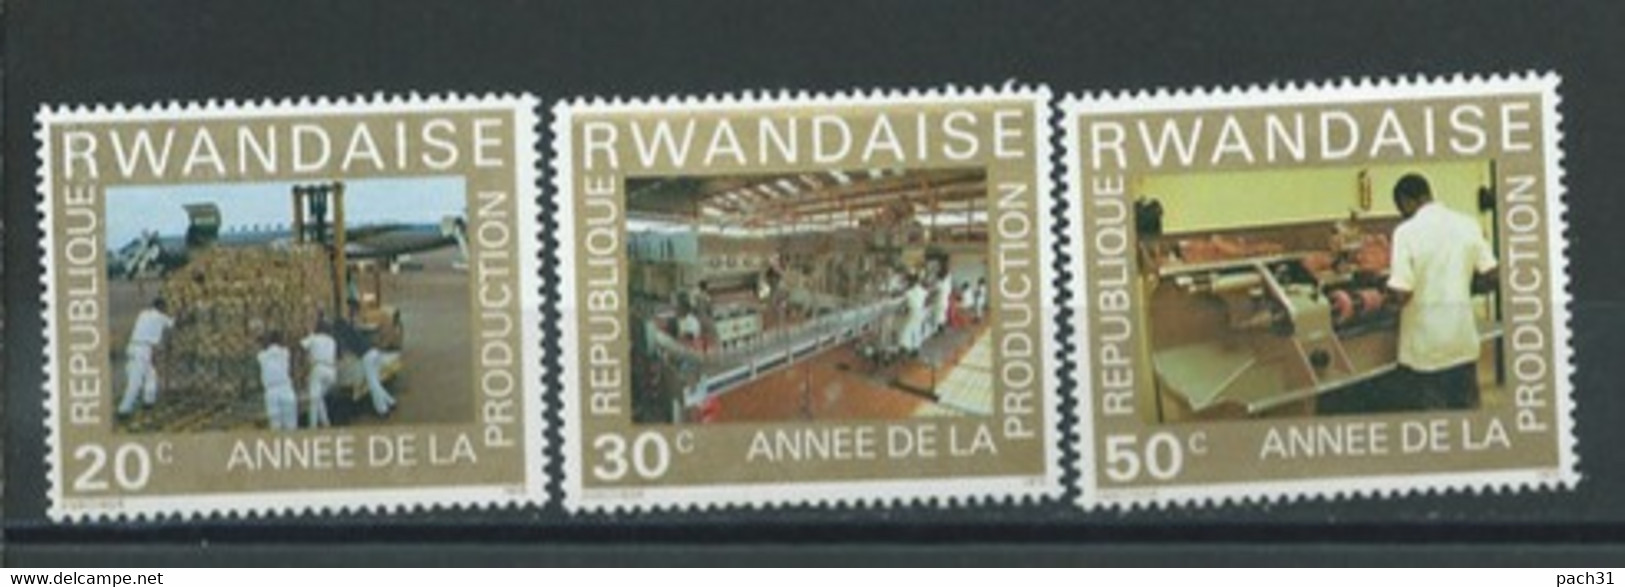 Rwanda  Lot De Timbres   Thème   Année De La Production - Colecciones